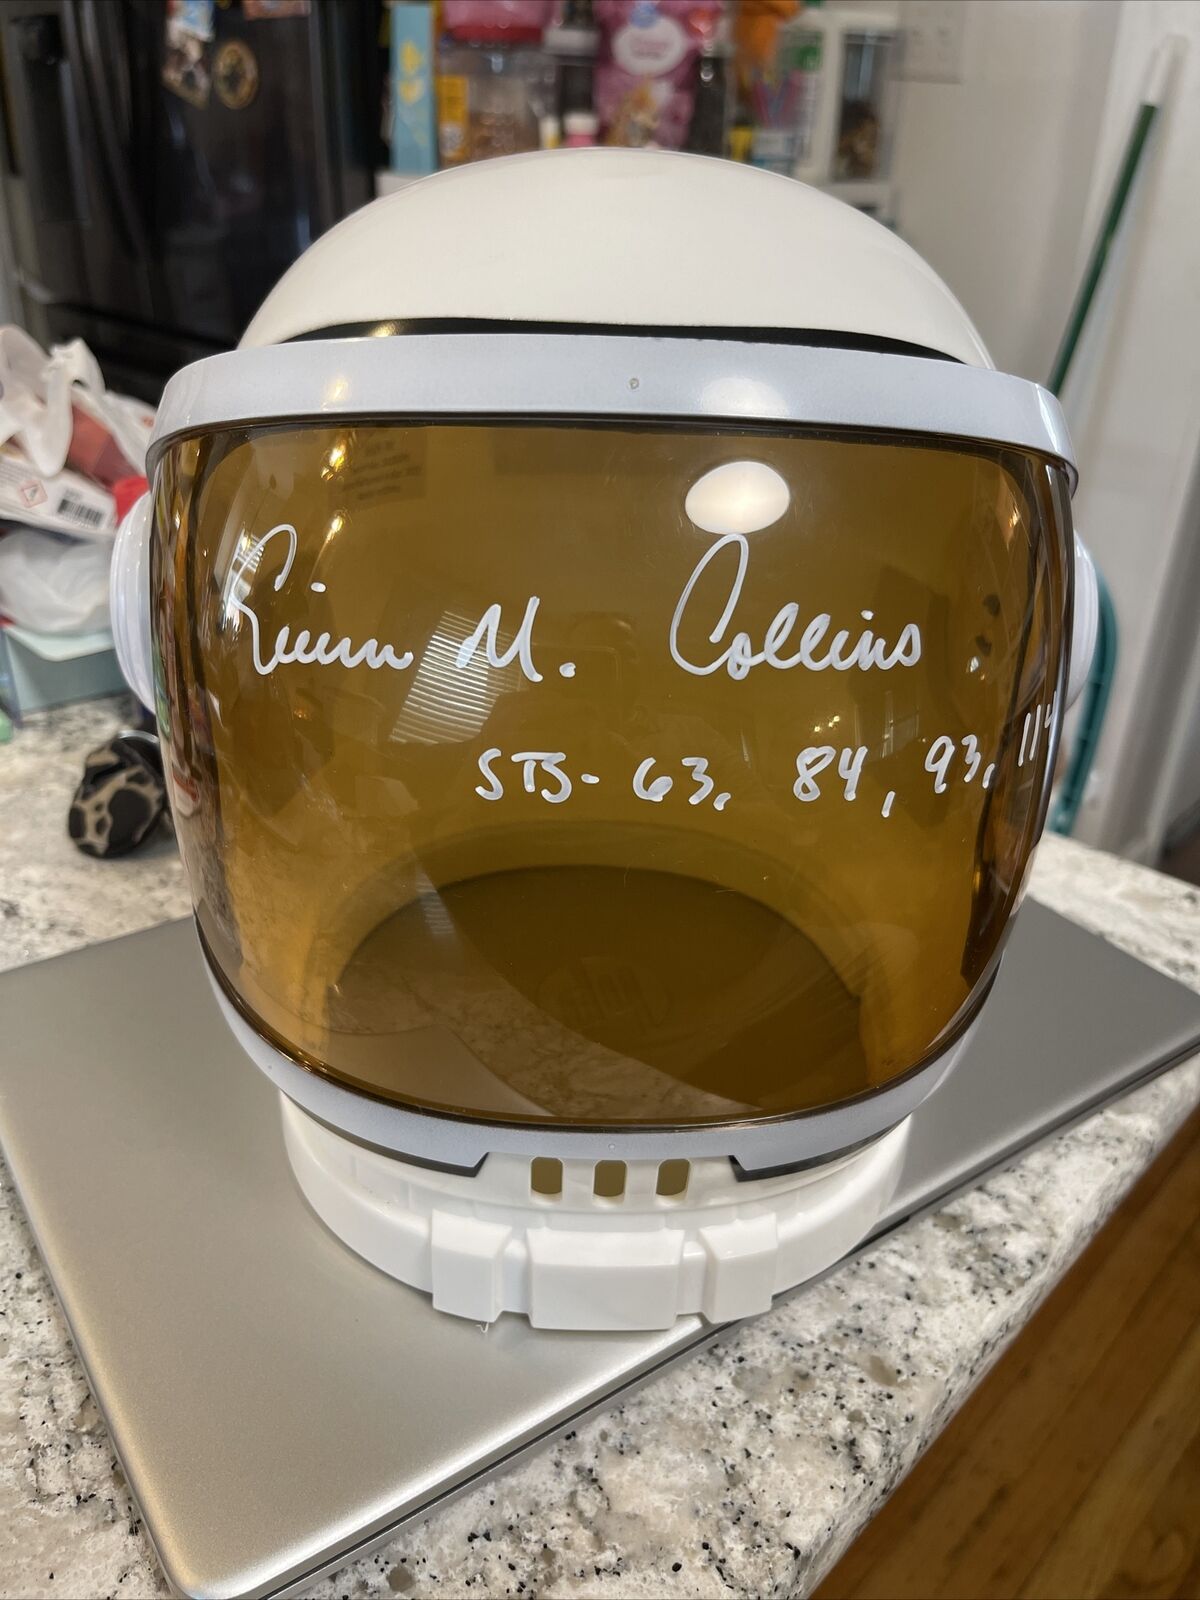 Eileen Collins Signed Nasa Space Helmet Beckett STS 63, 84, 93, 114